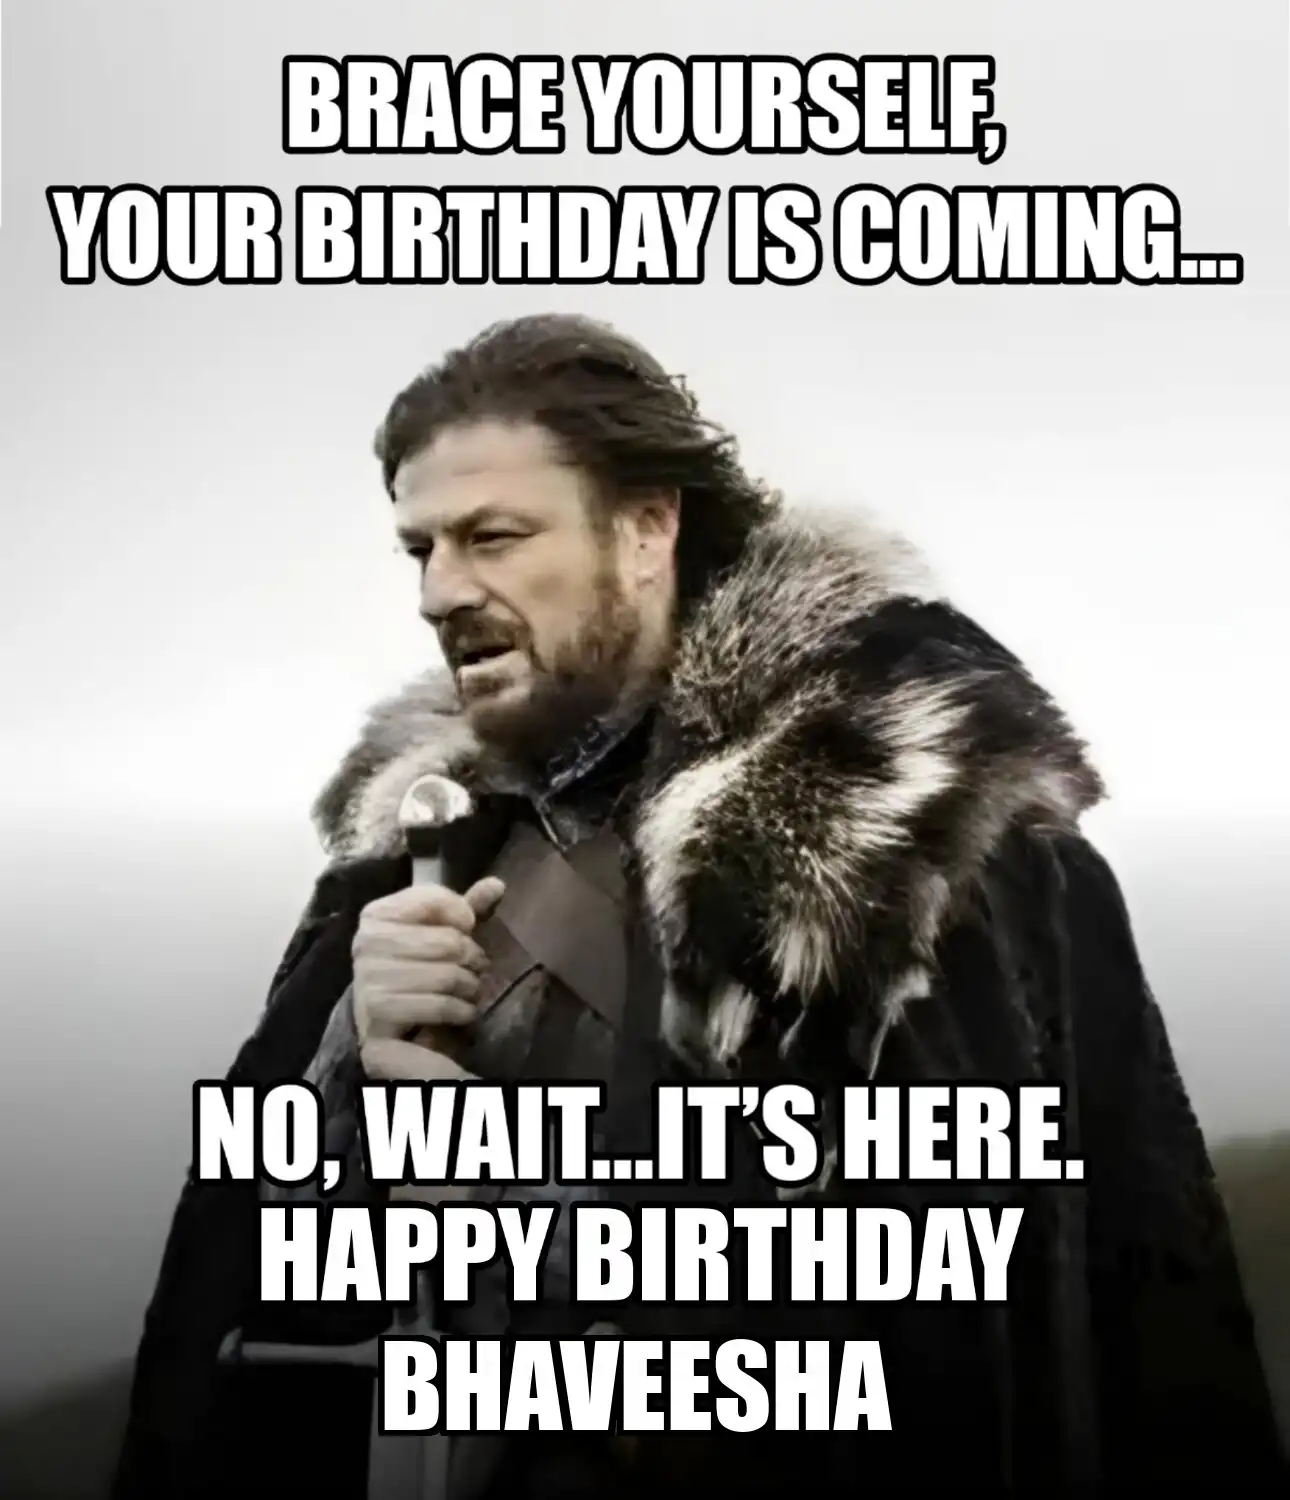 Happy Birthday Bhaveesha Brace Yourself Your Birthday Is Coming Meme